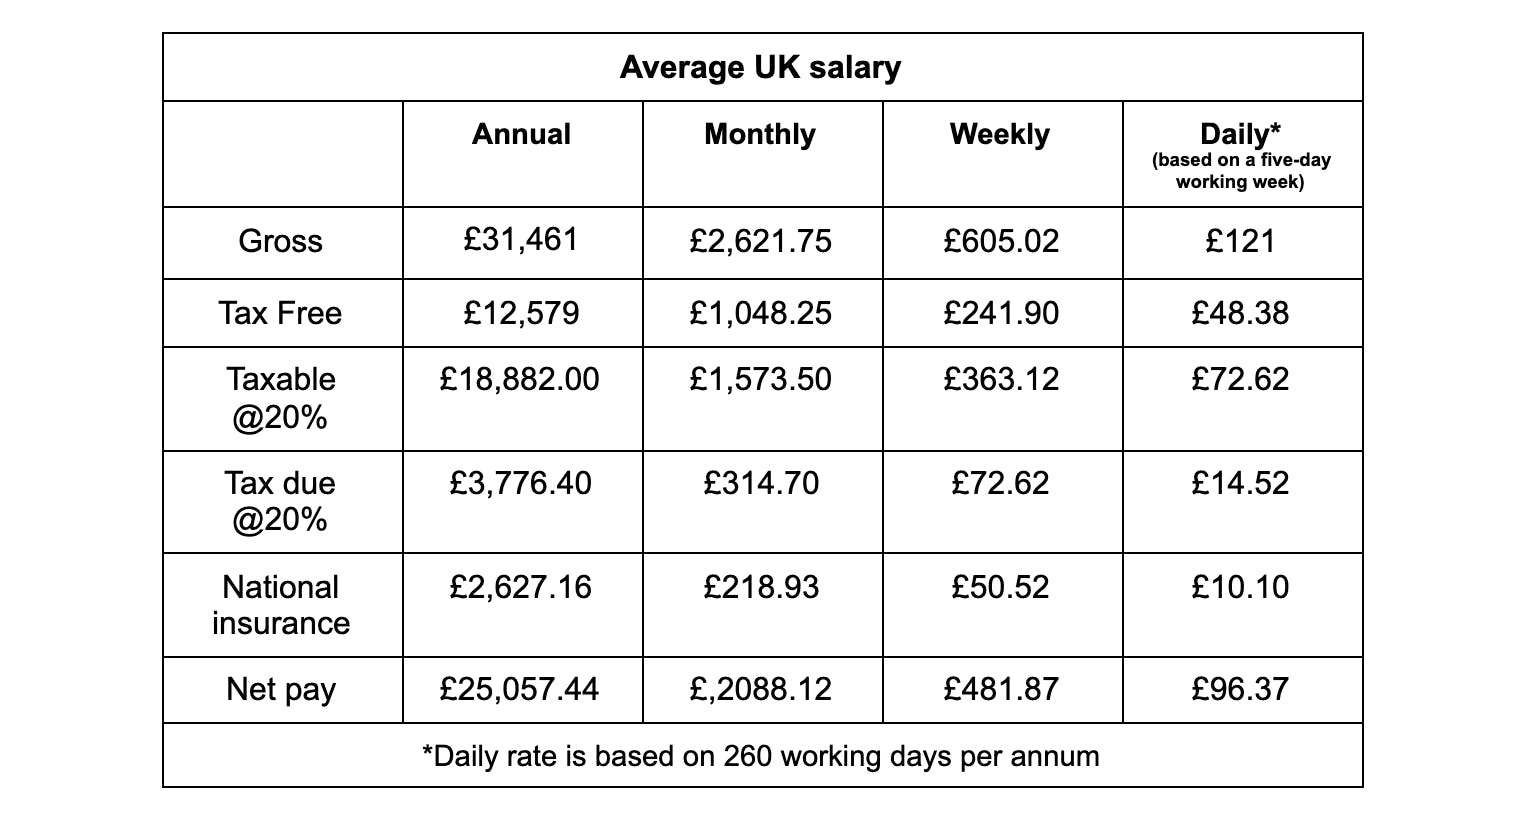 Average UK salary broken down.